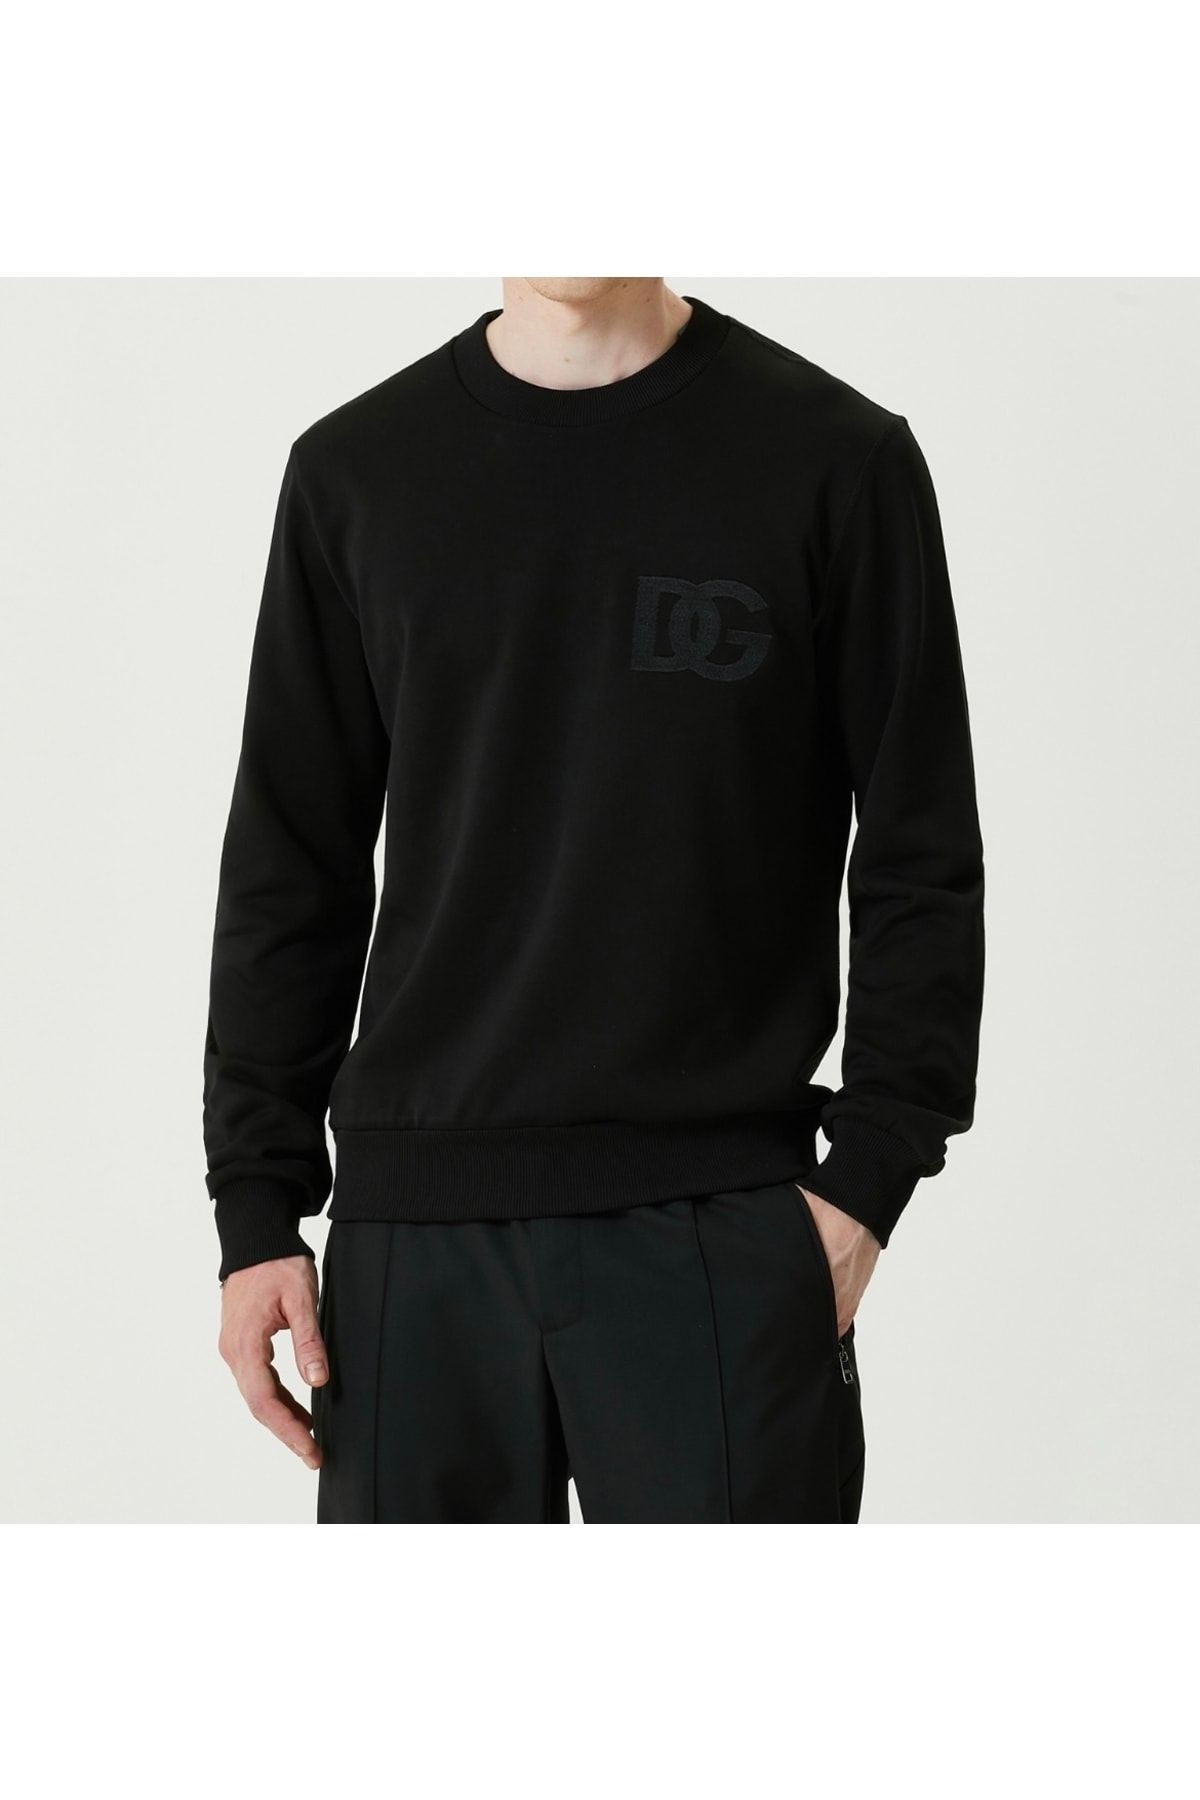 Dolce&Gabbana Dg Patch Sweatshirt